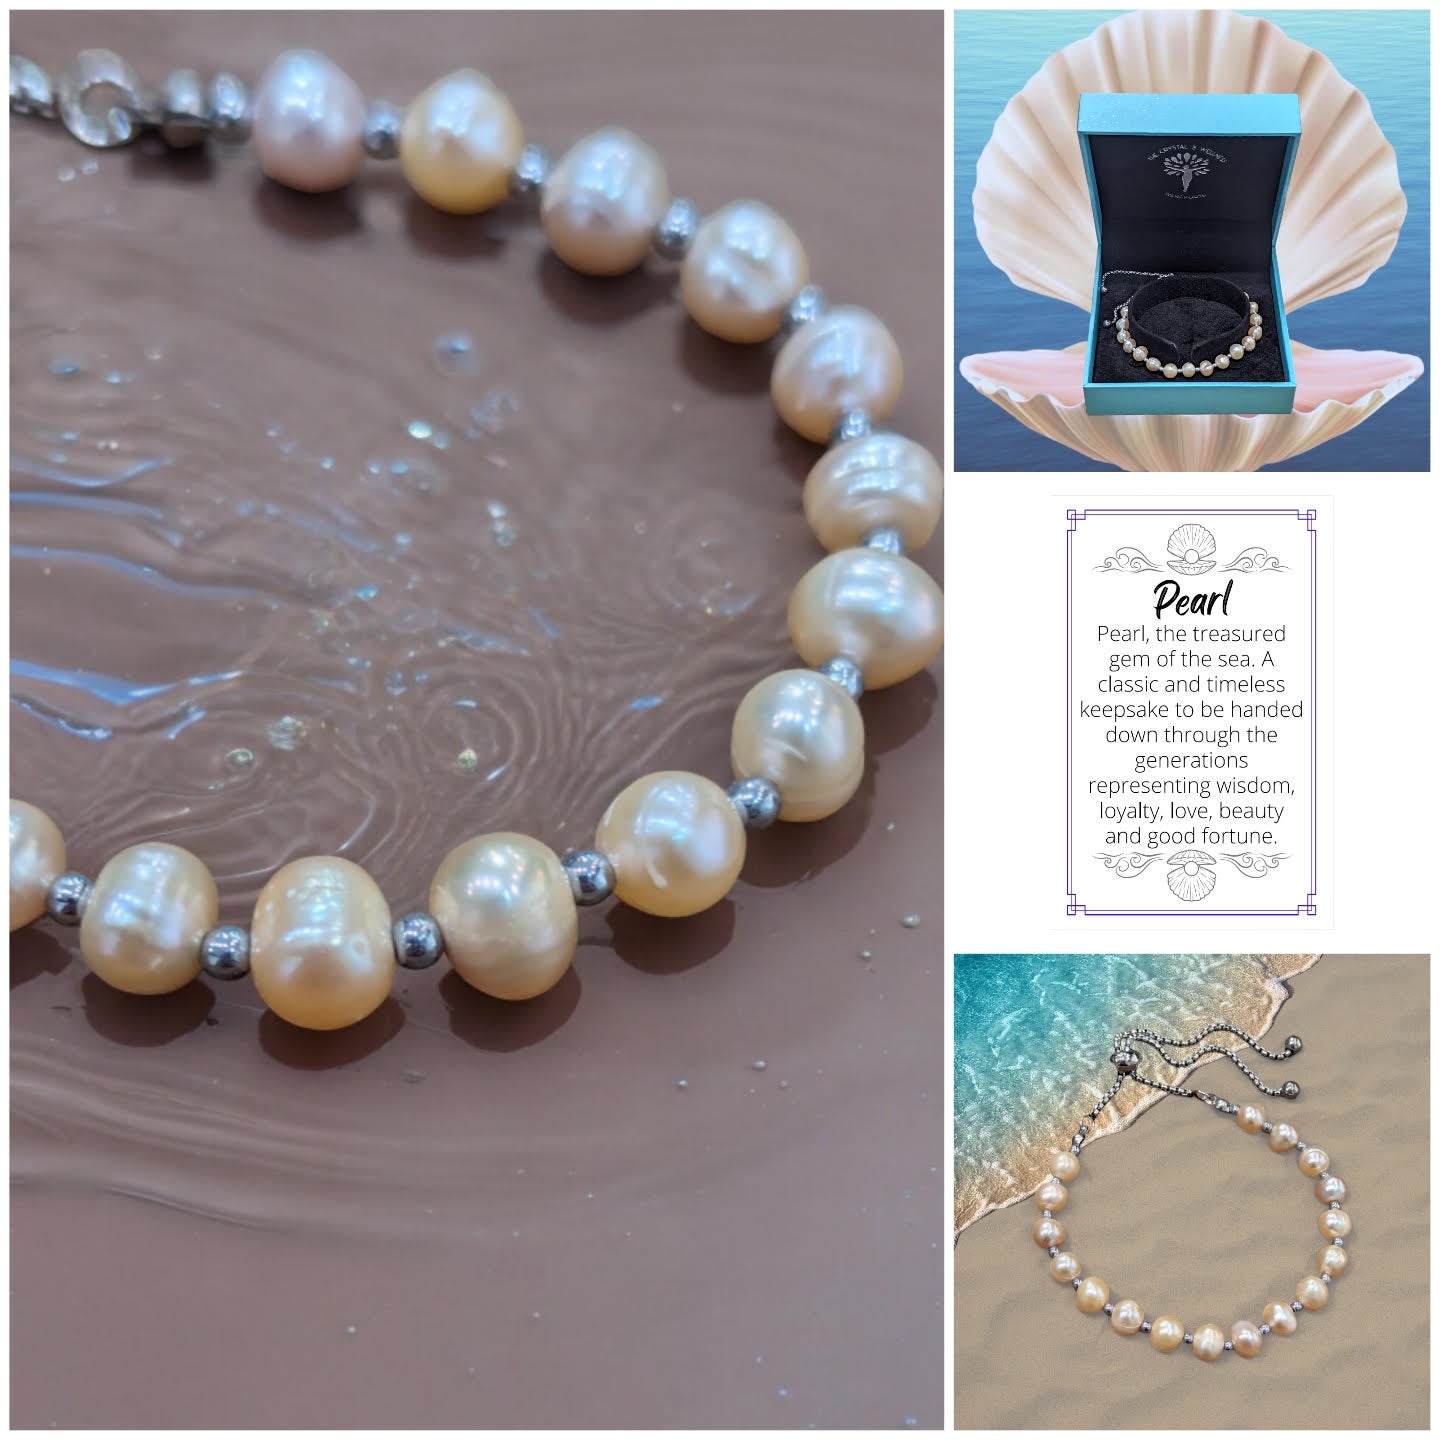 Blush Freshwater Pearl 6mm bead fully adjustable bracelet ~ Silver